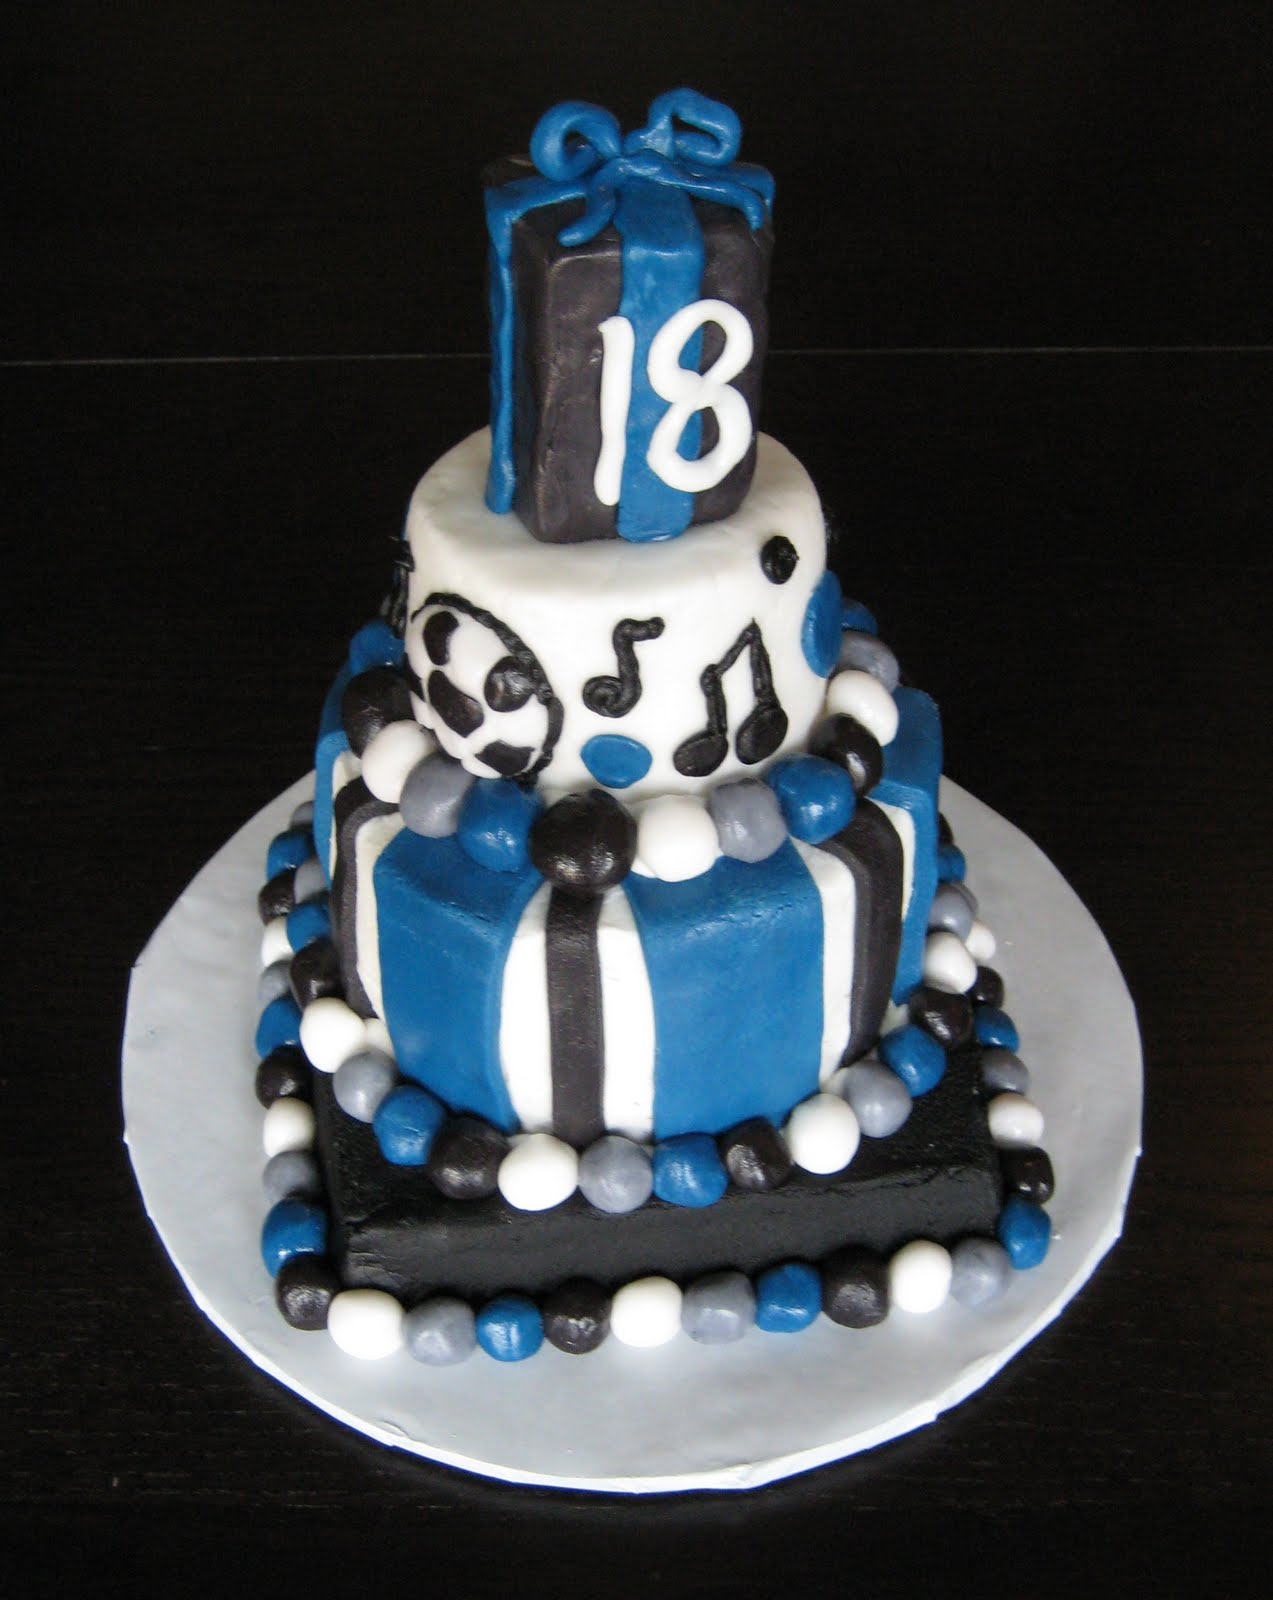 18th Birthday Cake.JPG